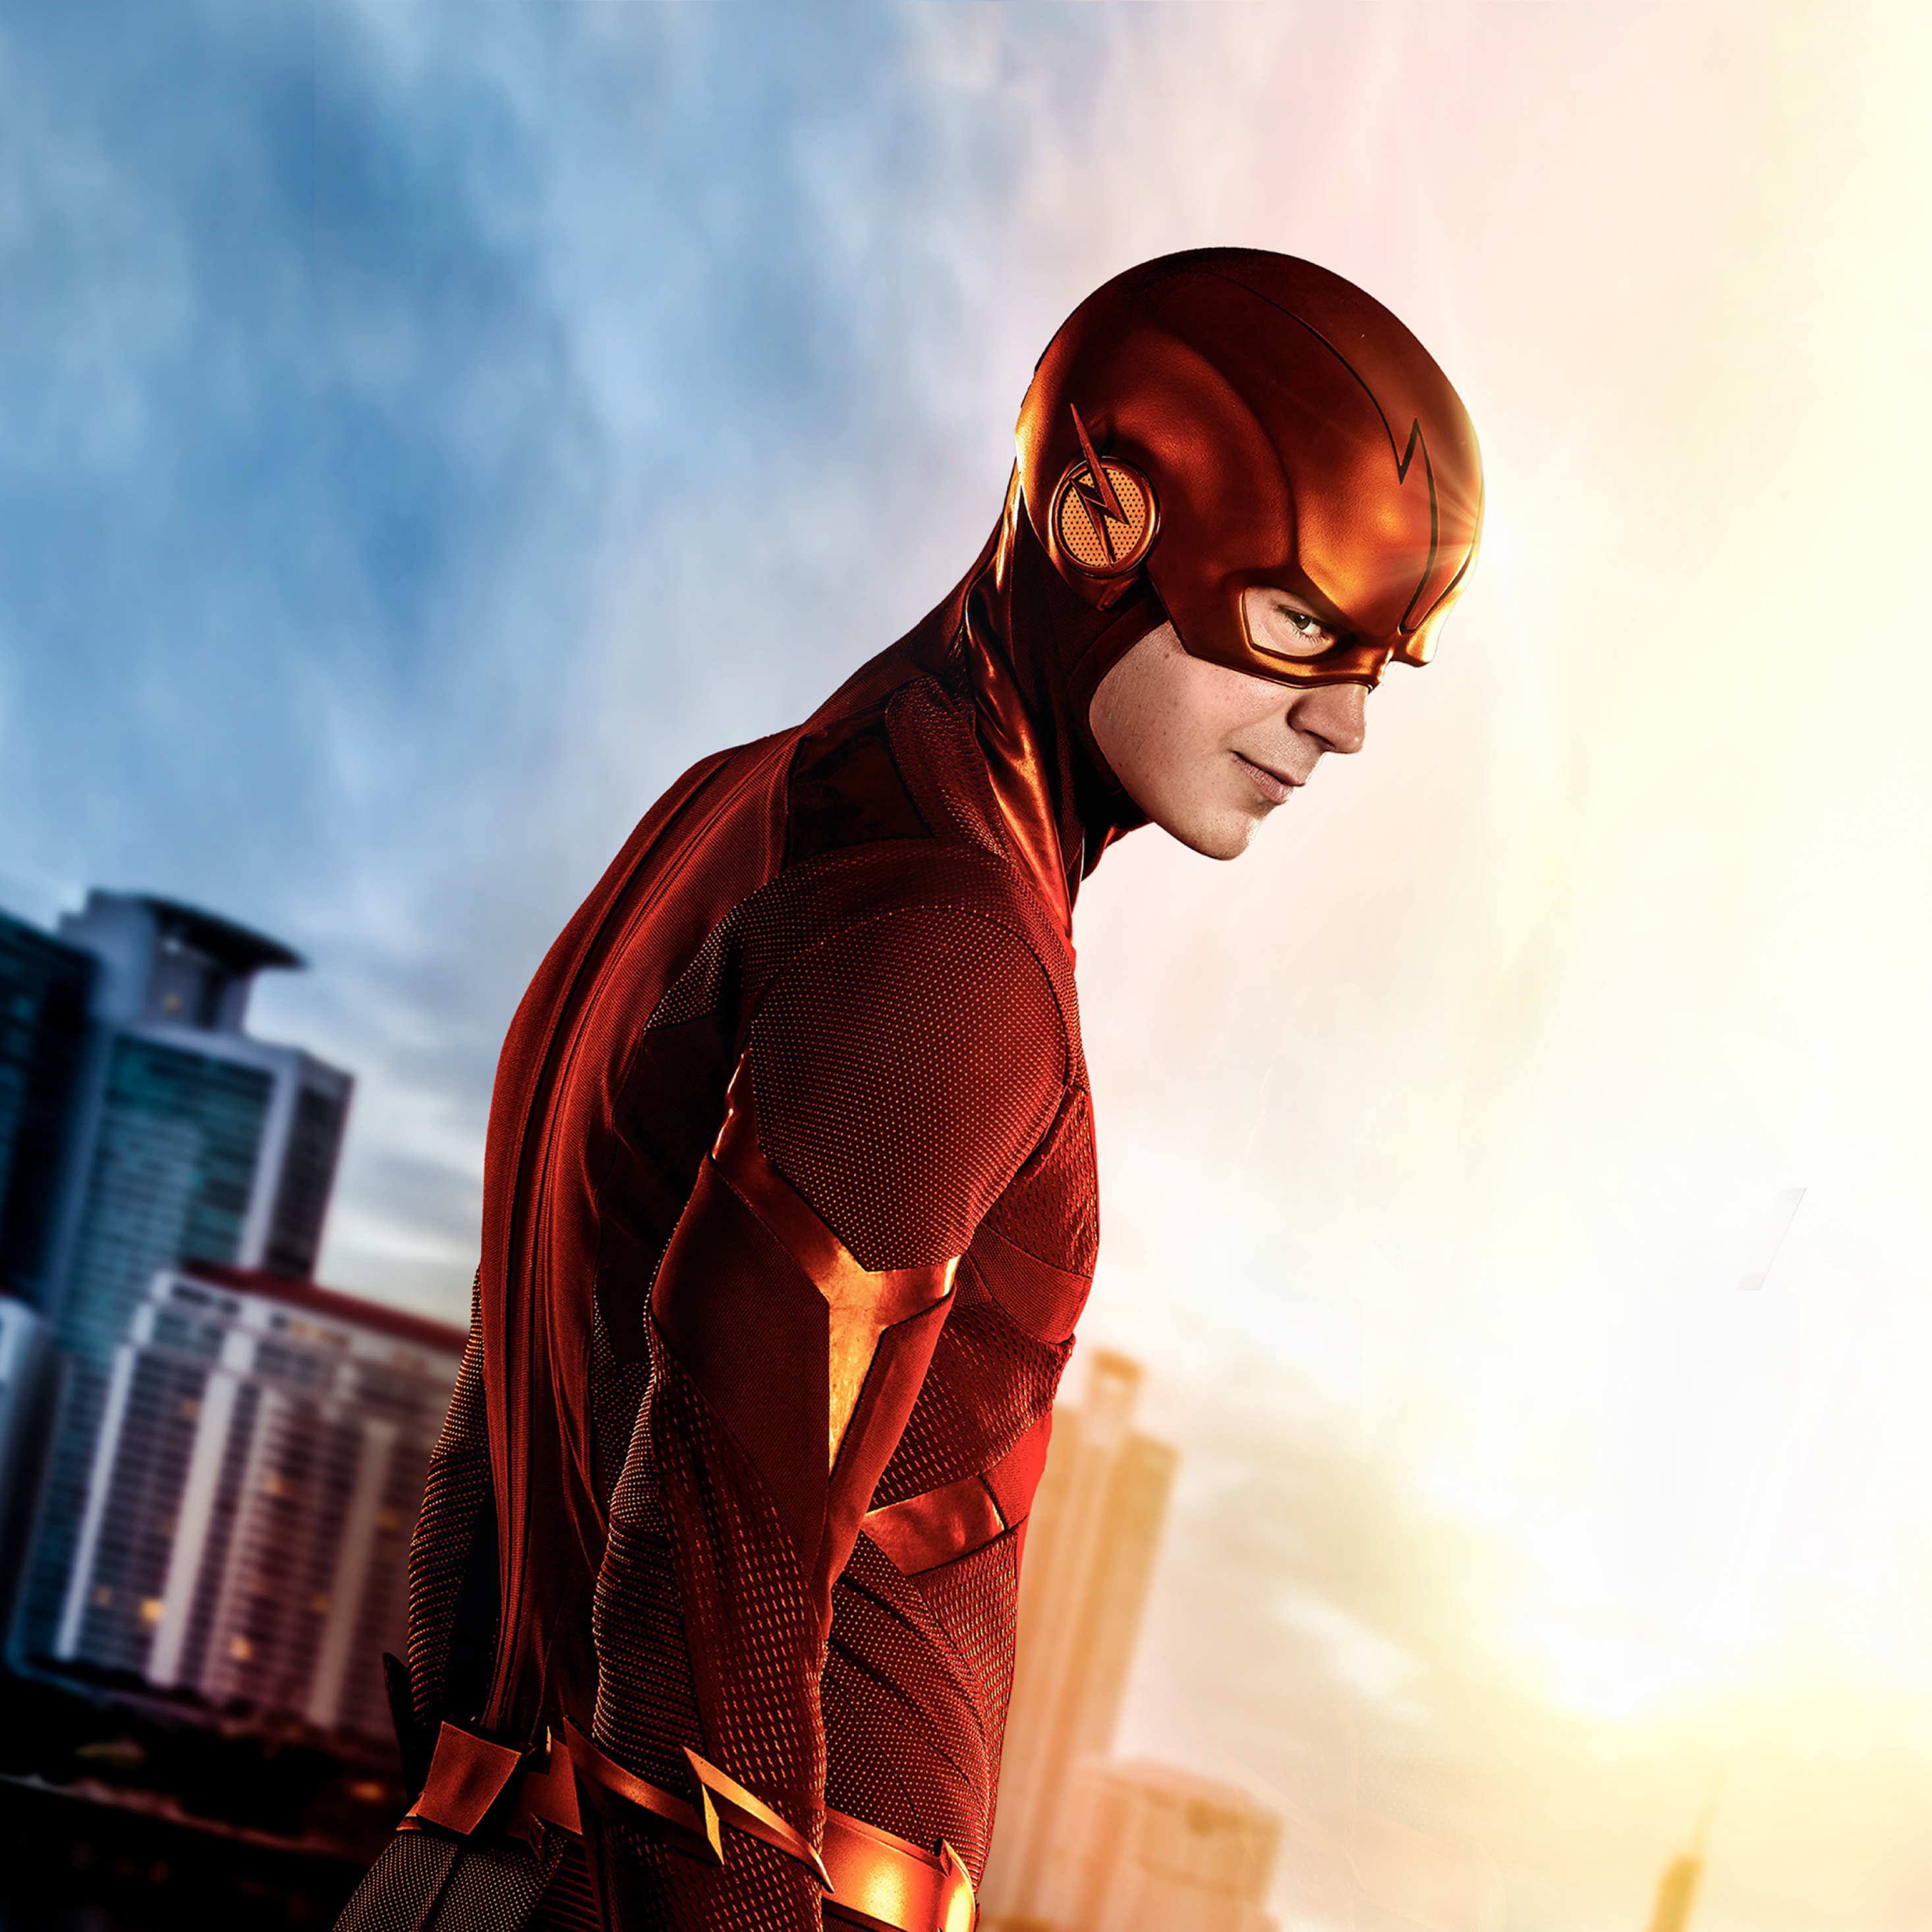 Pro flash 4pda. The Flash CW Постер. Флэш 2014. Флеш 4д.